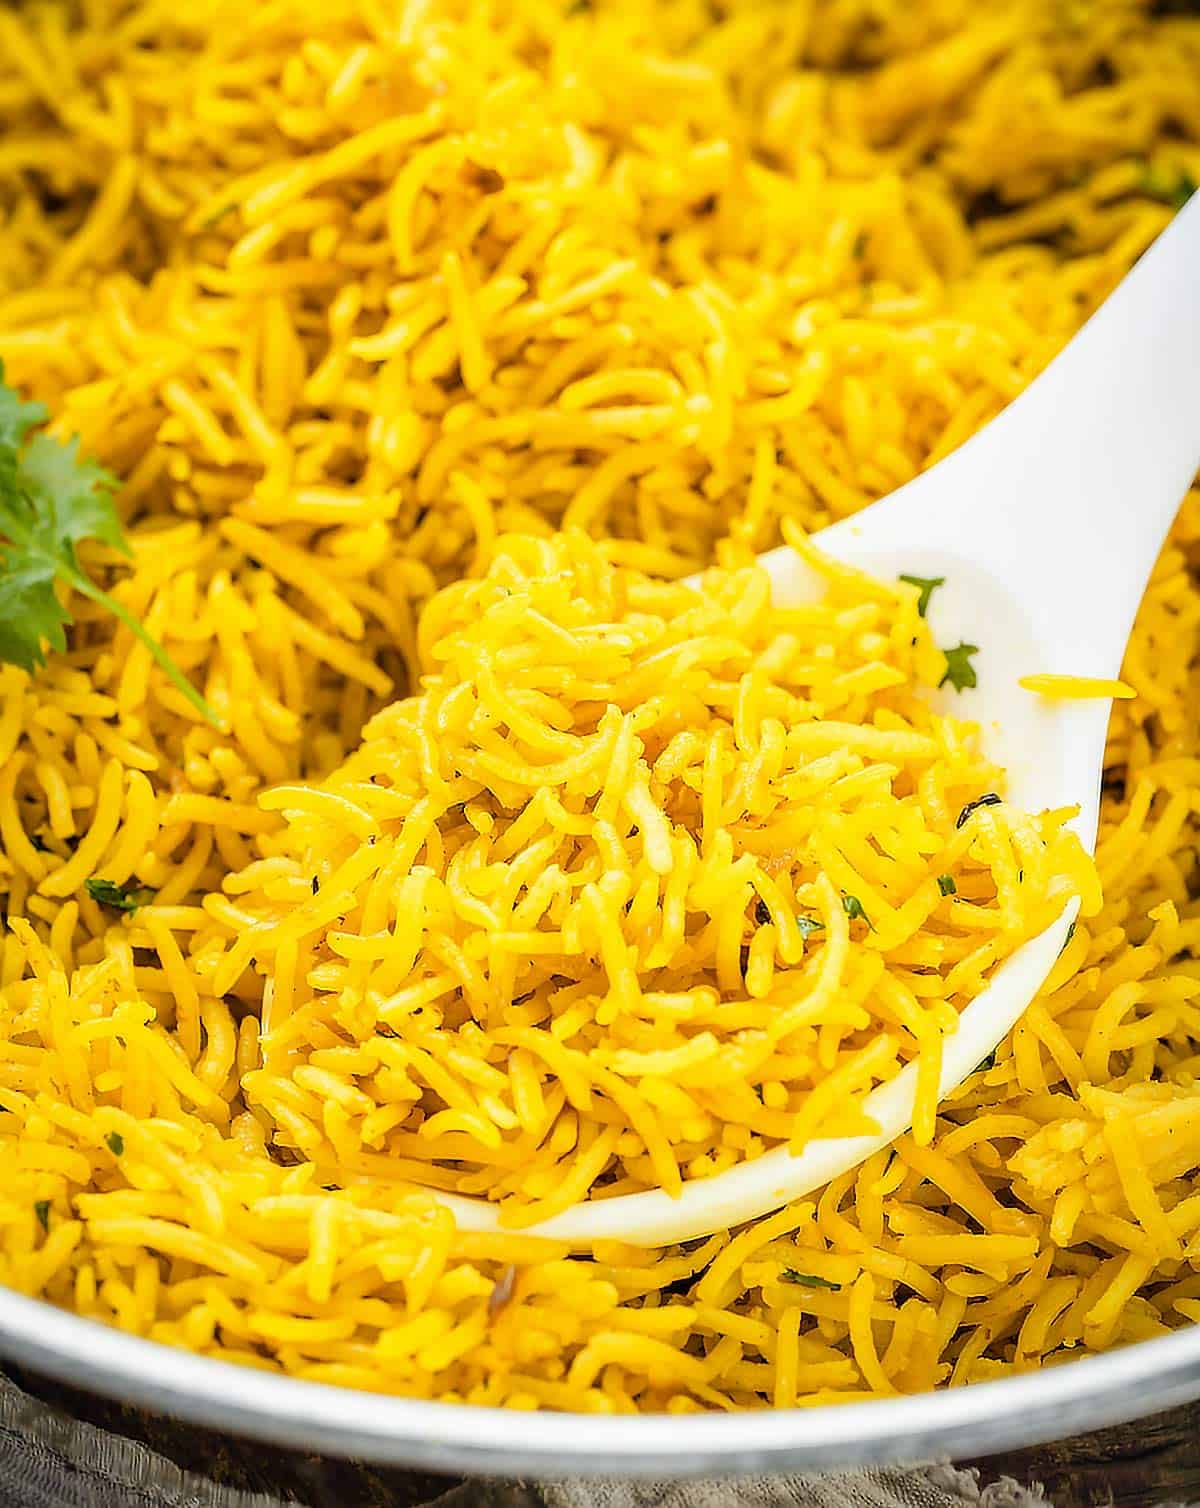  A close up shot of yellow rice